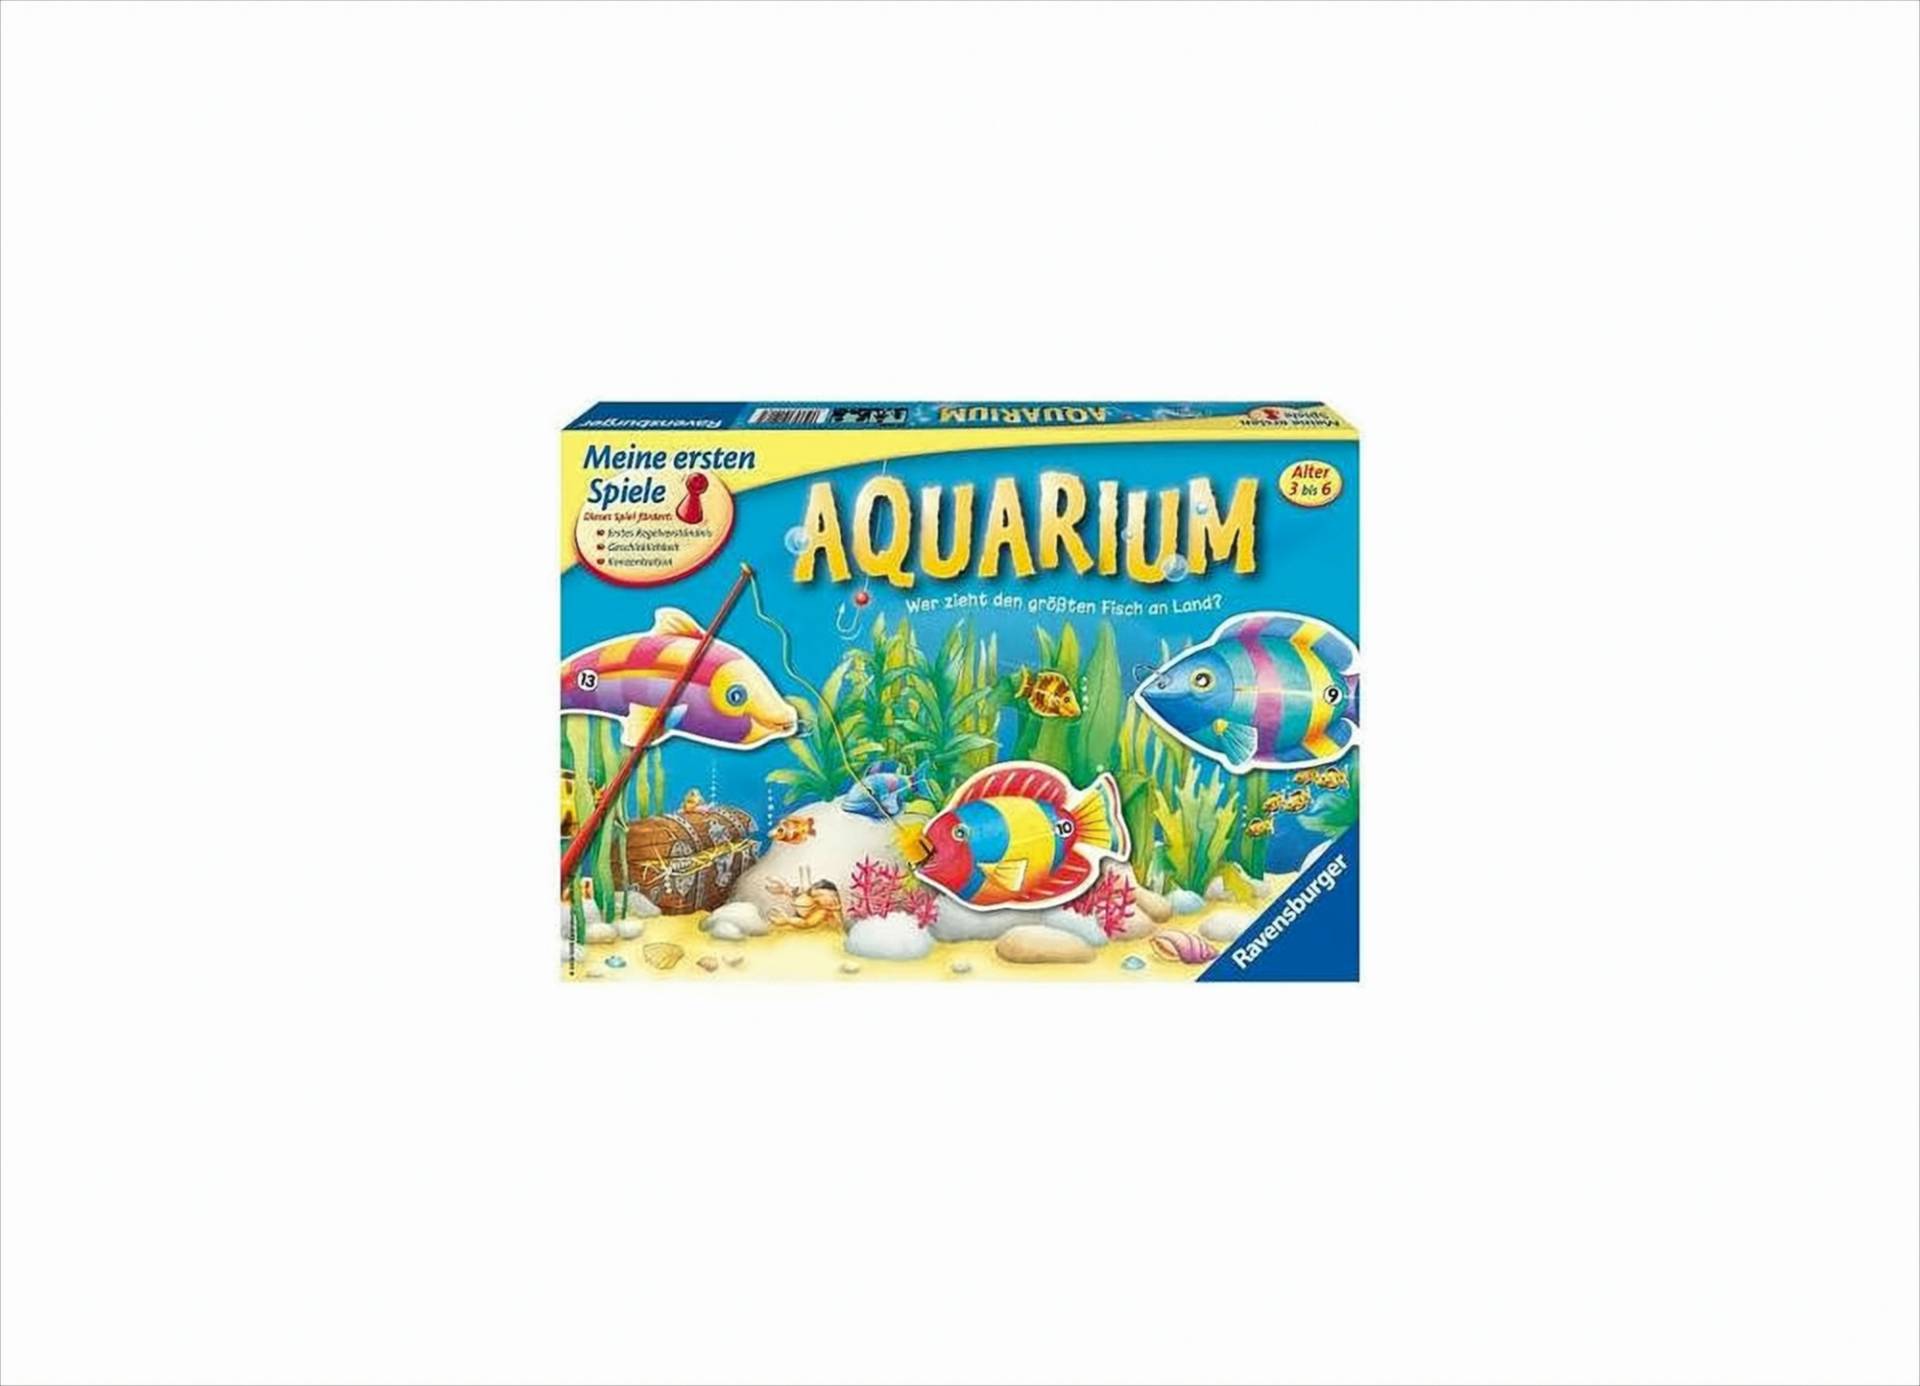 Aquarium von Ravensburger Spieleverlag